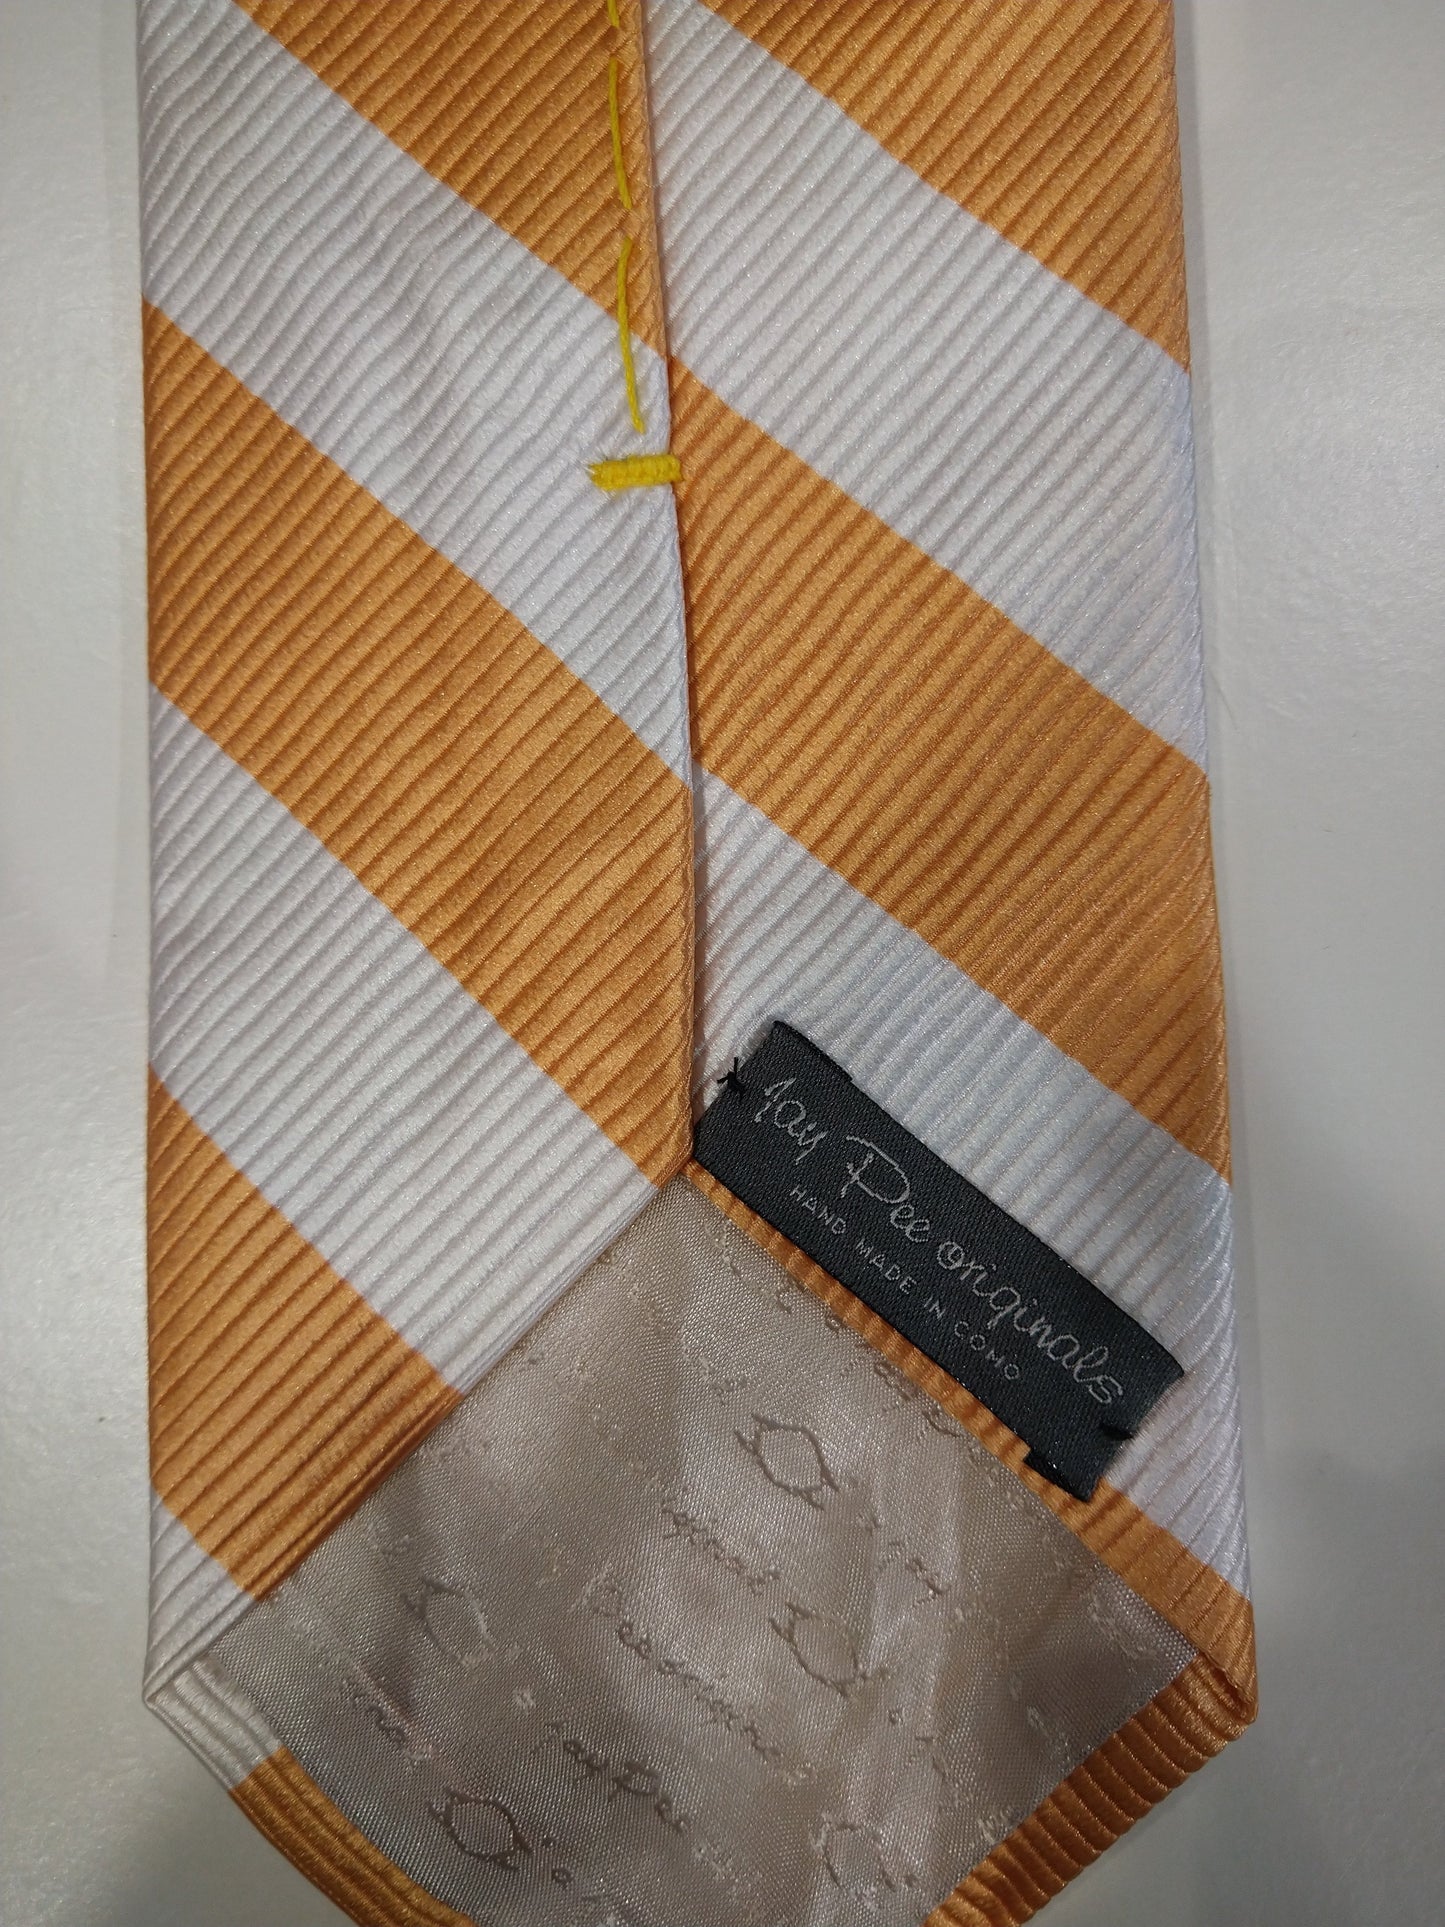 Jay Pee Original Hand Made in Como Silk Tie. Strisce bianche arancioni.